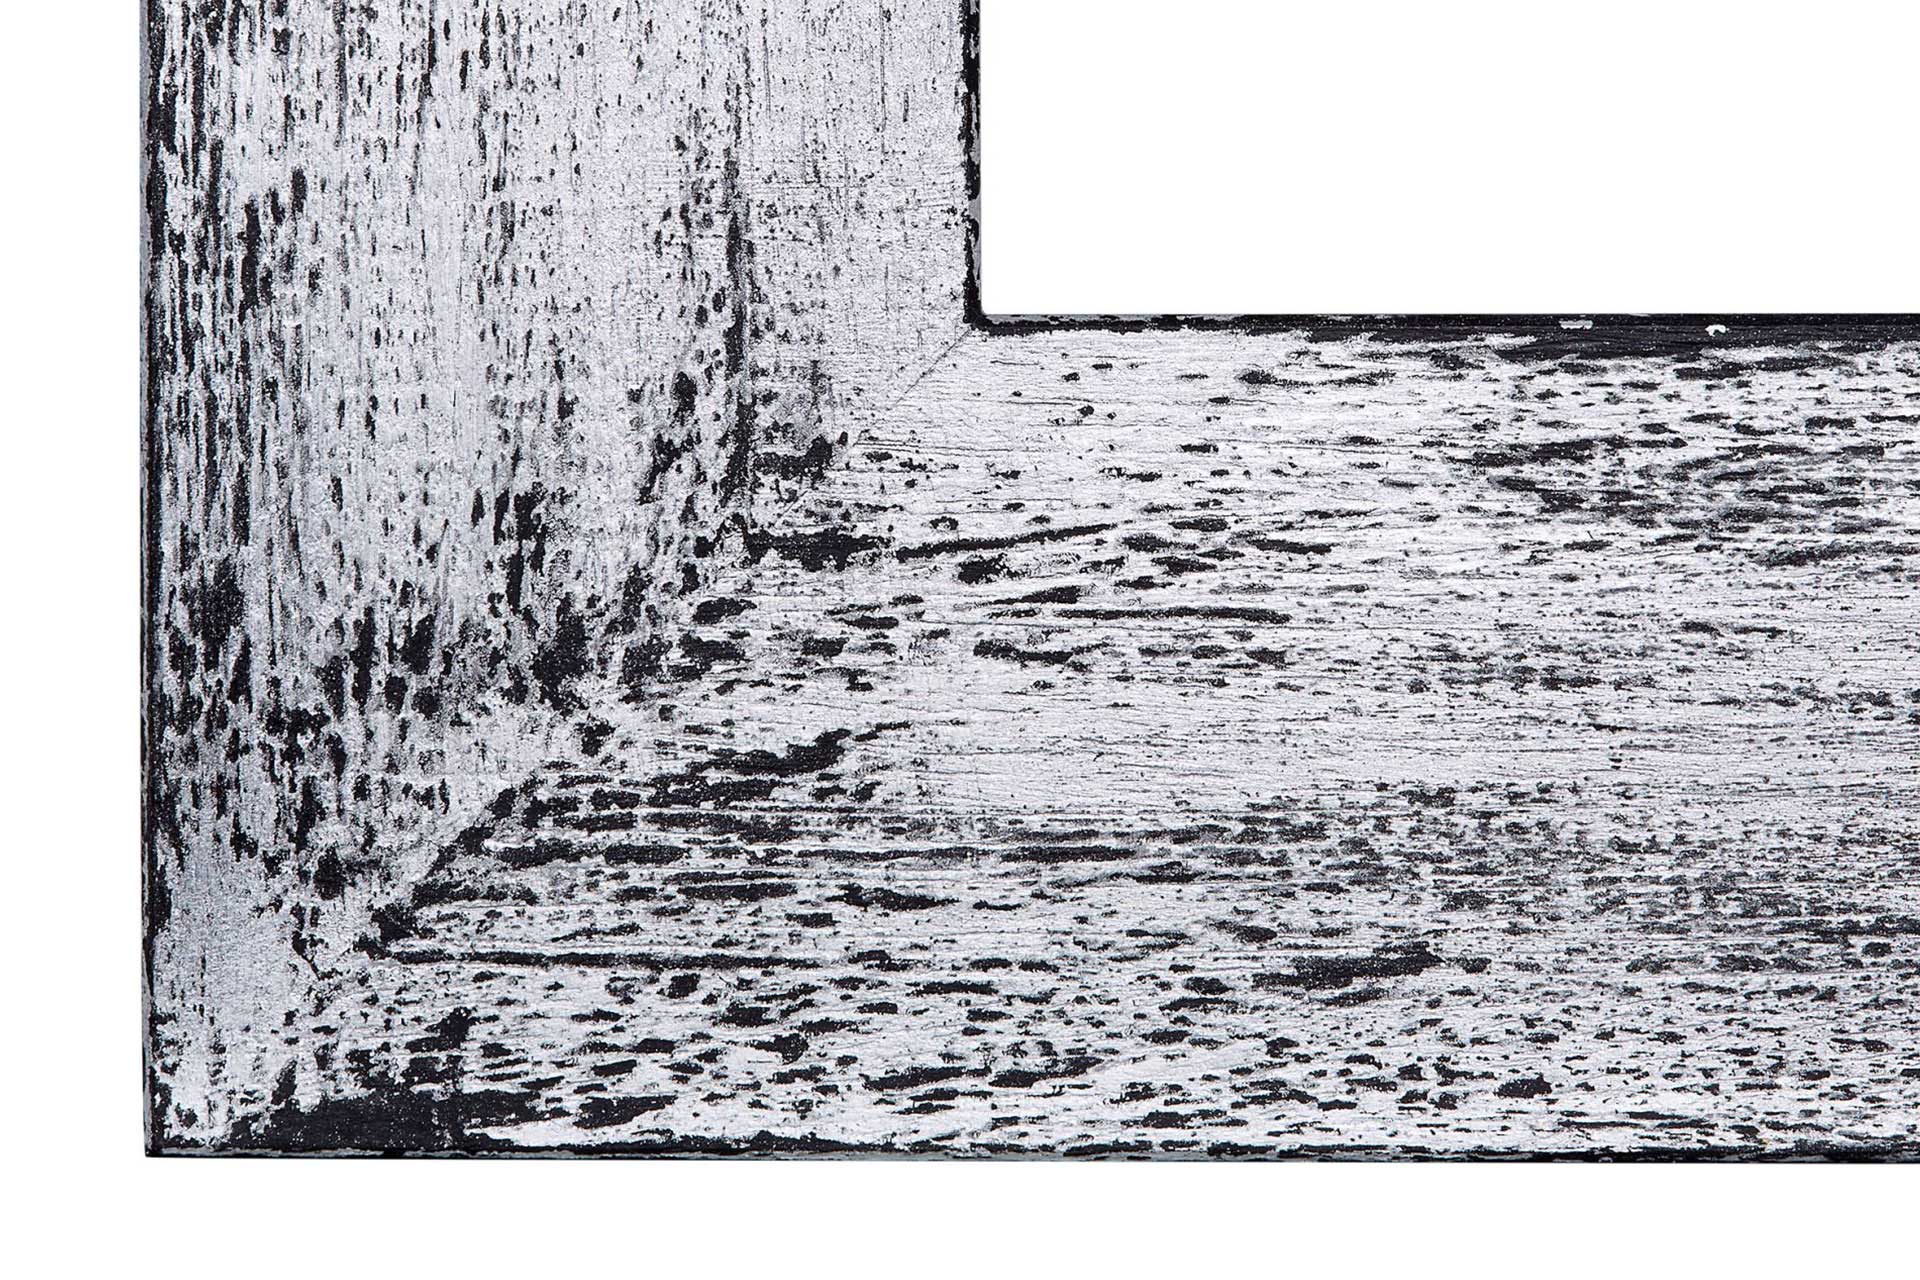 ASR-Rahmendesign Wandspiegel San Francisco, rechteckig, Finishing: Blattmetall Vollflächig, Design/Farbe Jack Black/Blattmetall Silber, Herstellung: by ASR-Rahmendesign, Material: Holz, Produkt Typ: Industrial-Style, Innenbereich, Facettenspiegel